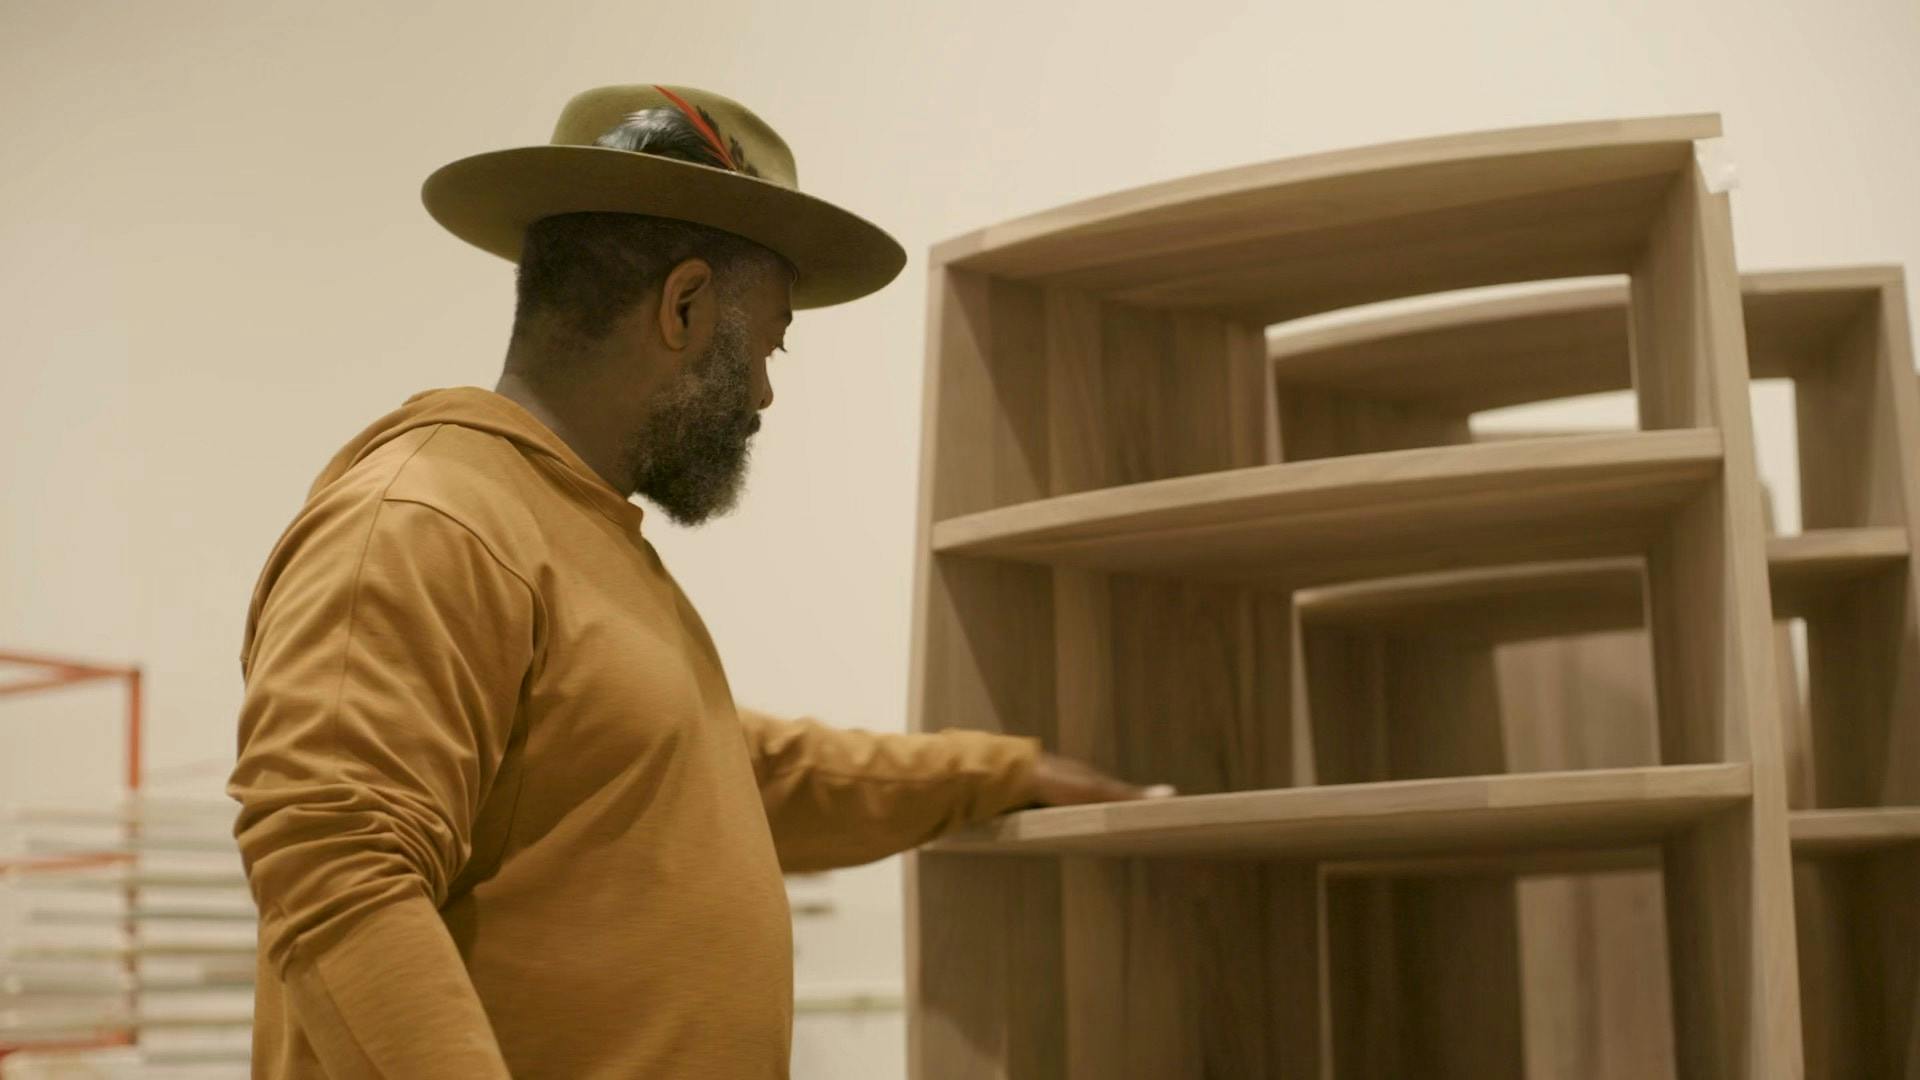 Dwayne Betts wearing a hat and touching a wooden shelf.